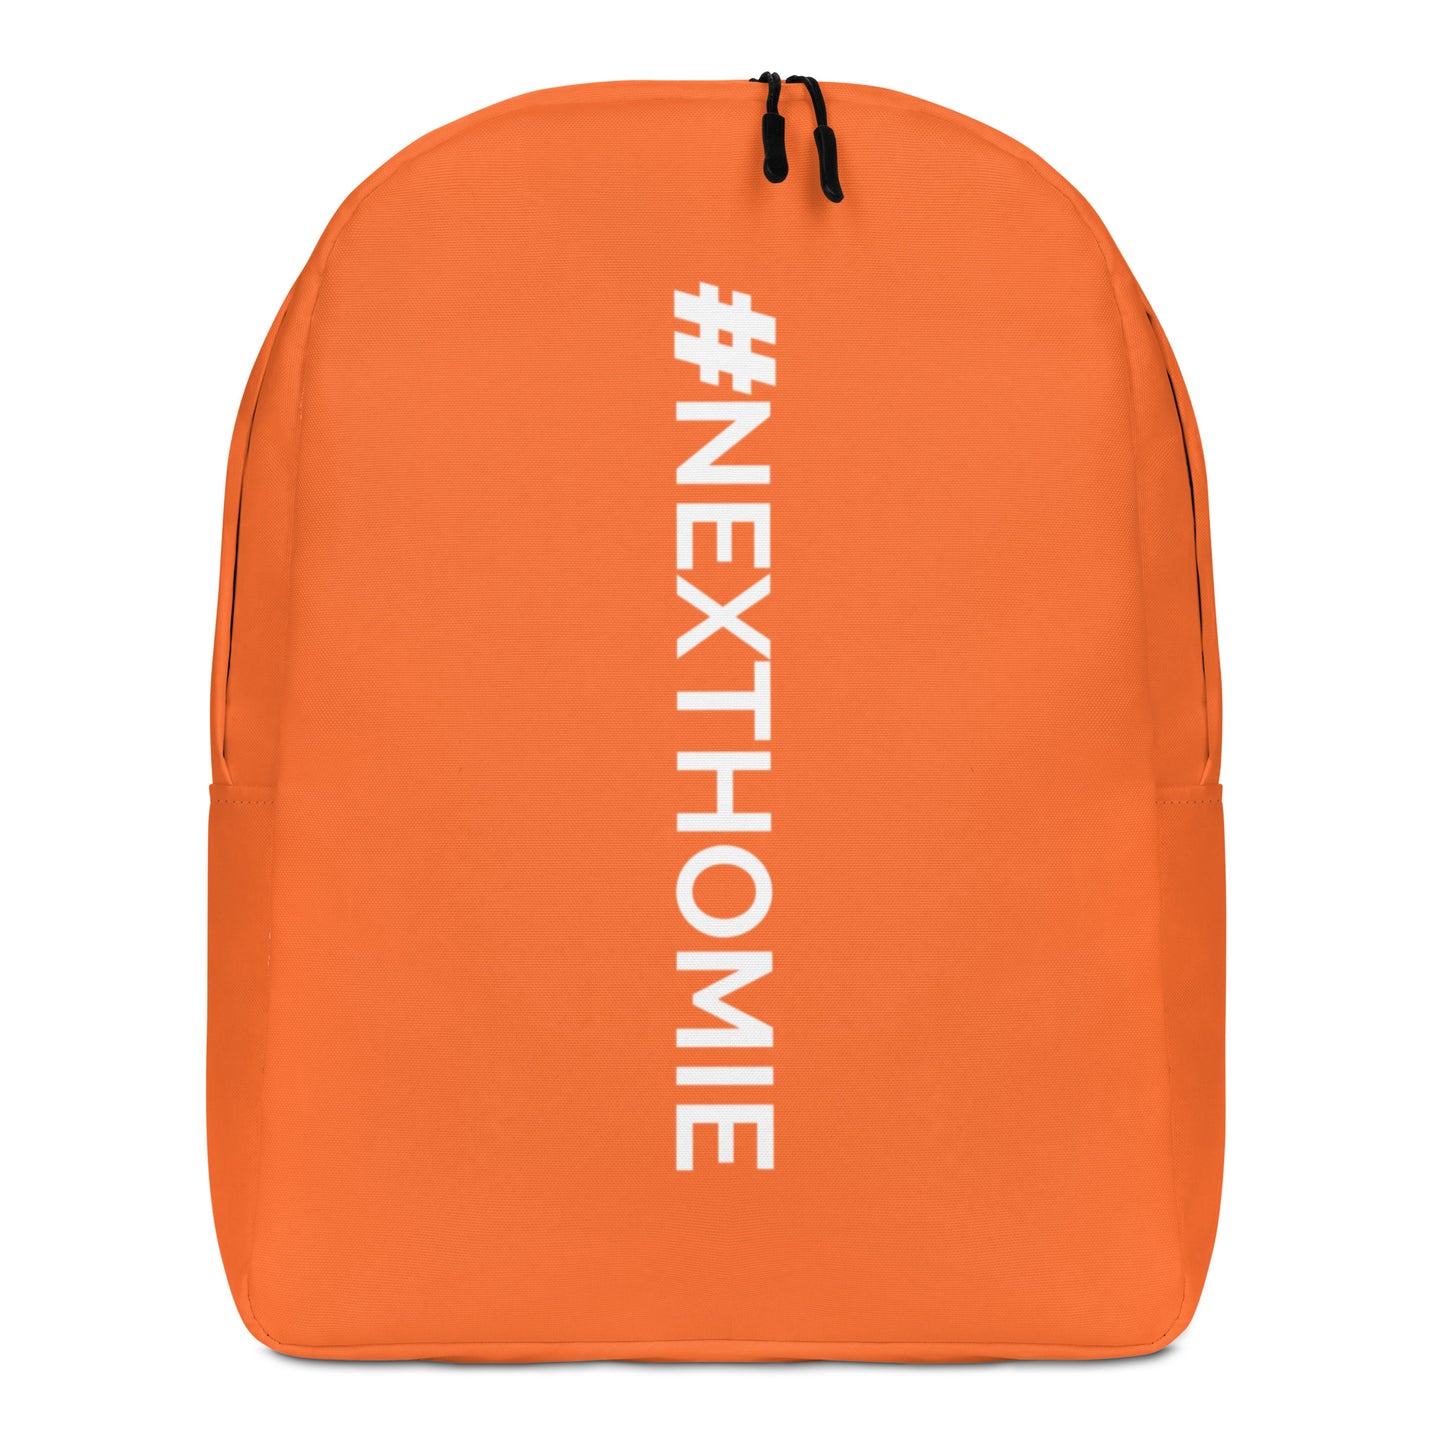 NextHomie Minimalist Backpack